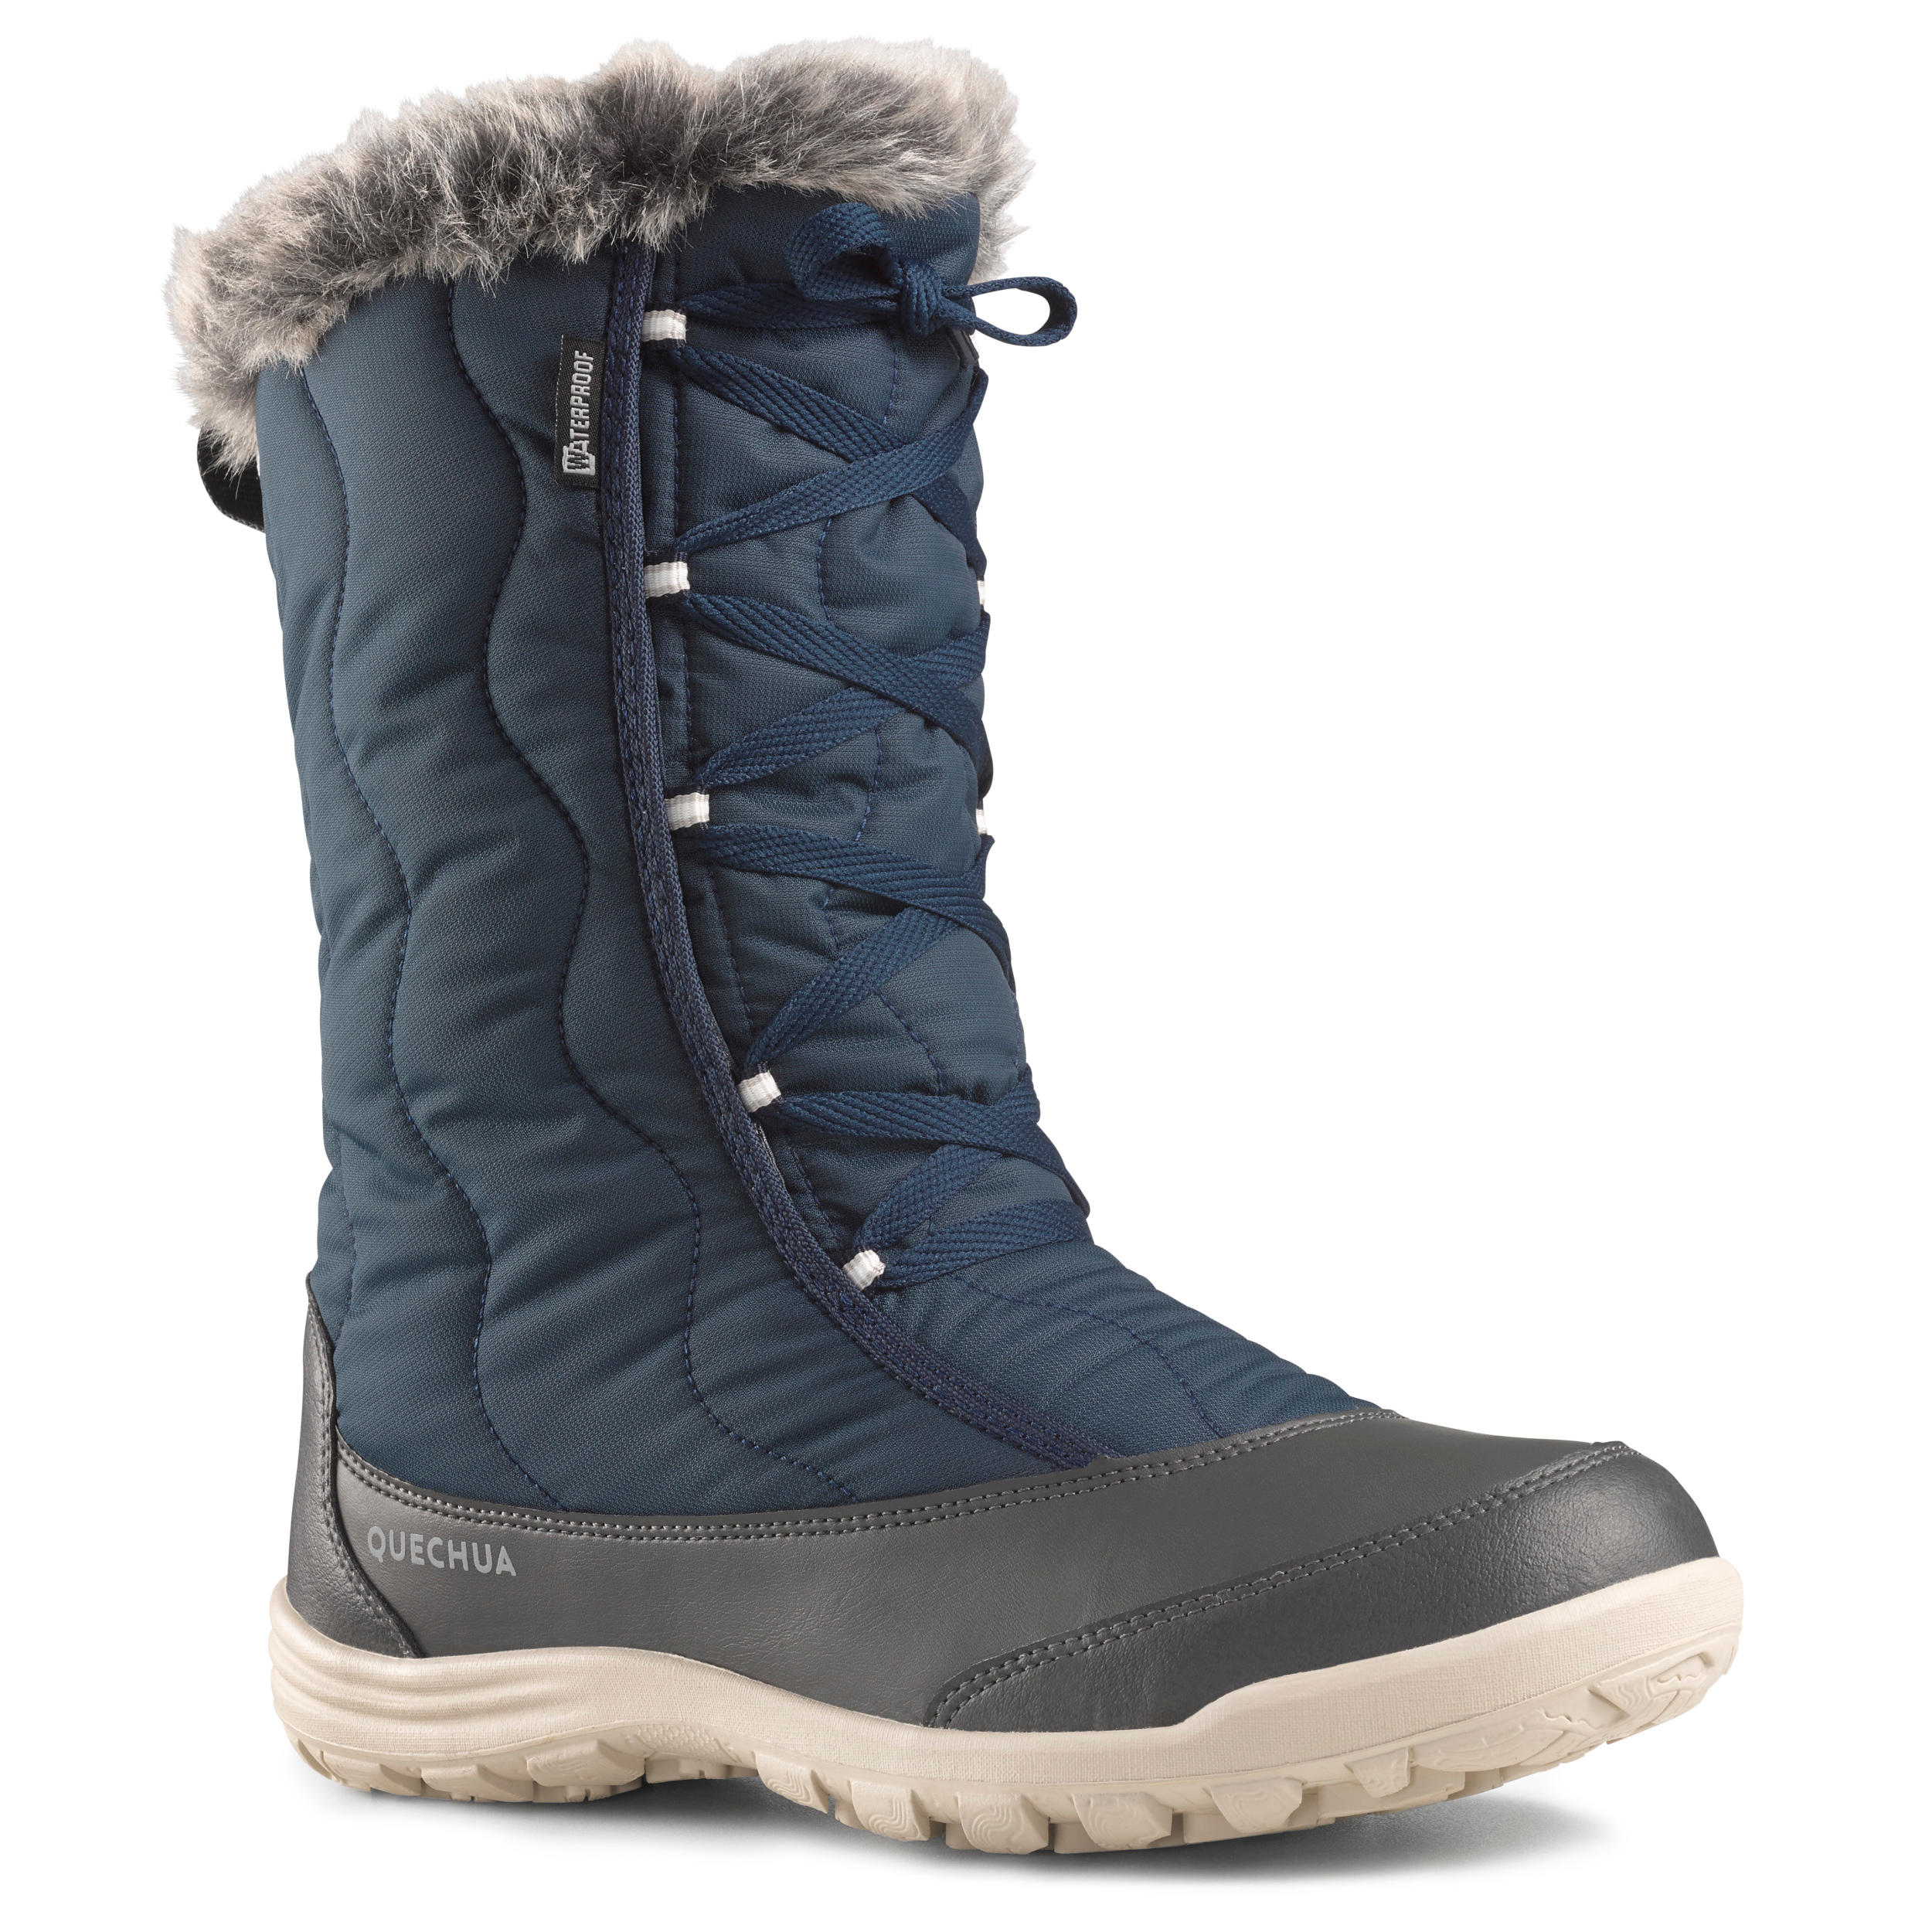 warm winter boots